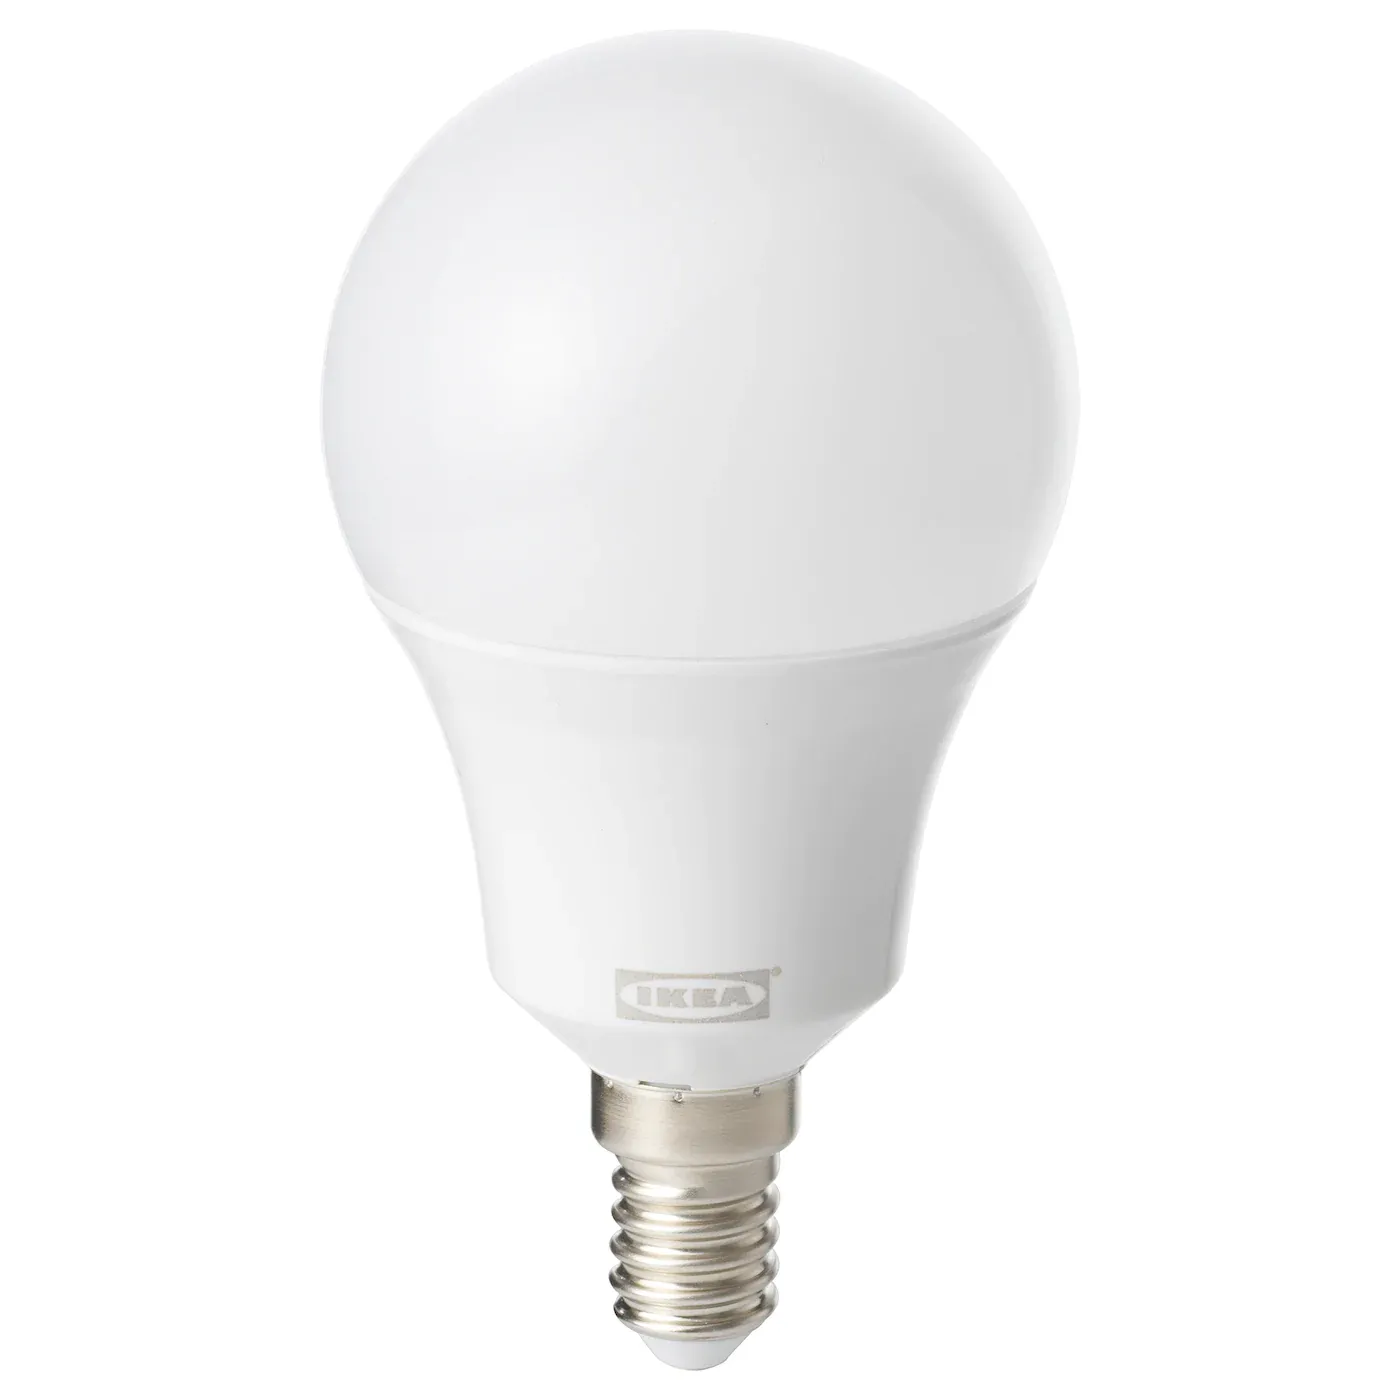 Tradfri LED bulb E14 600 lumen, dimmable white spectrum opal white